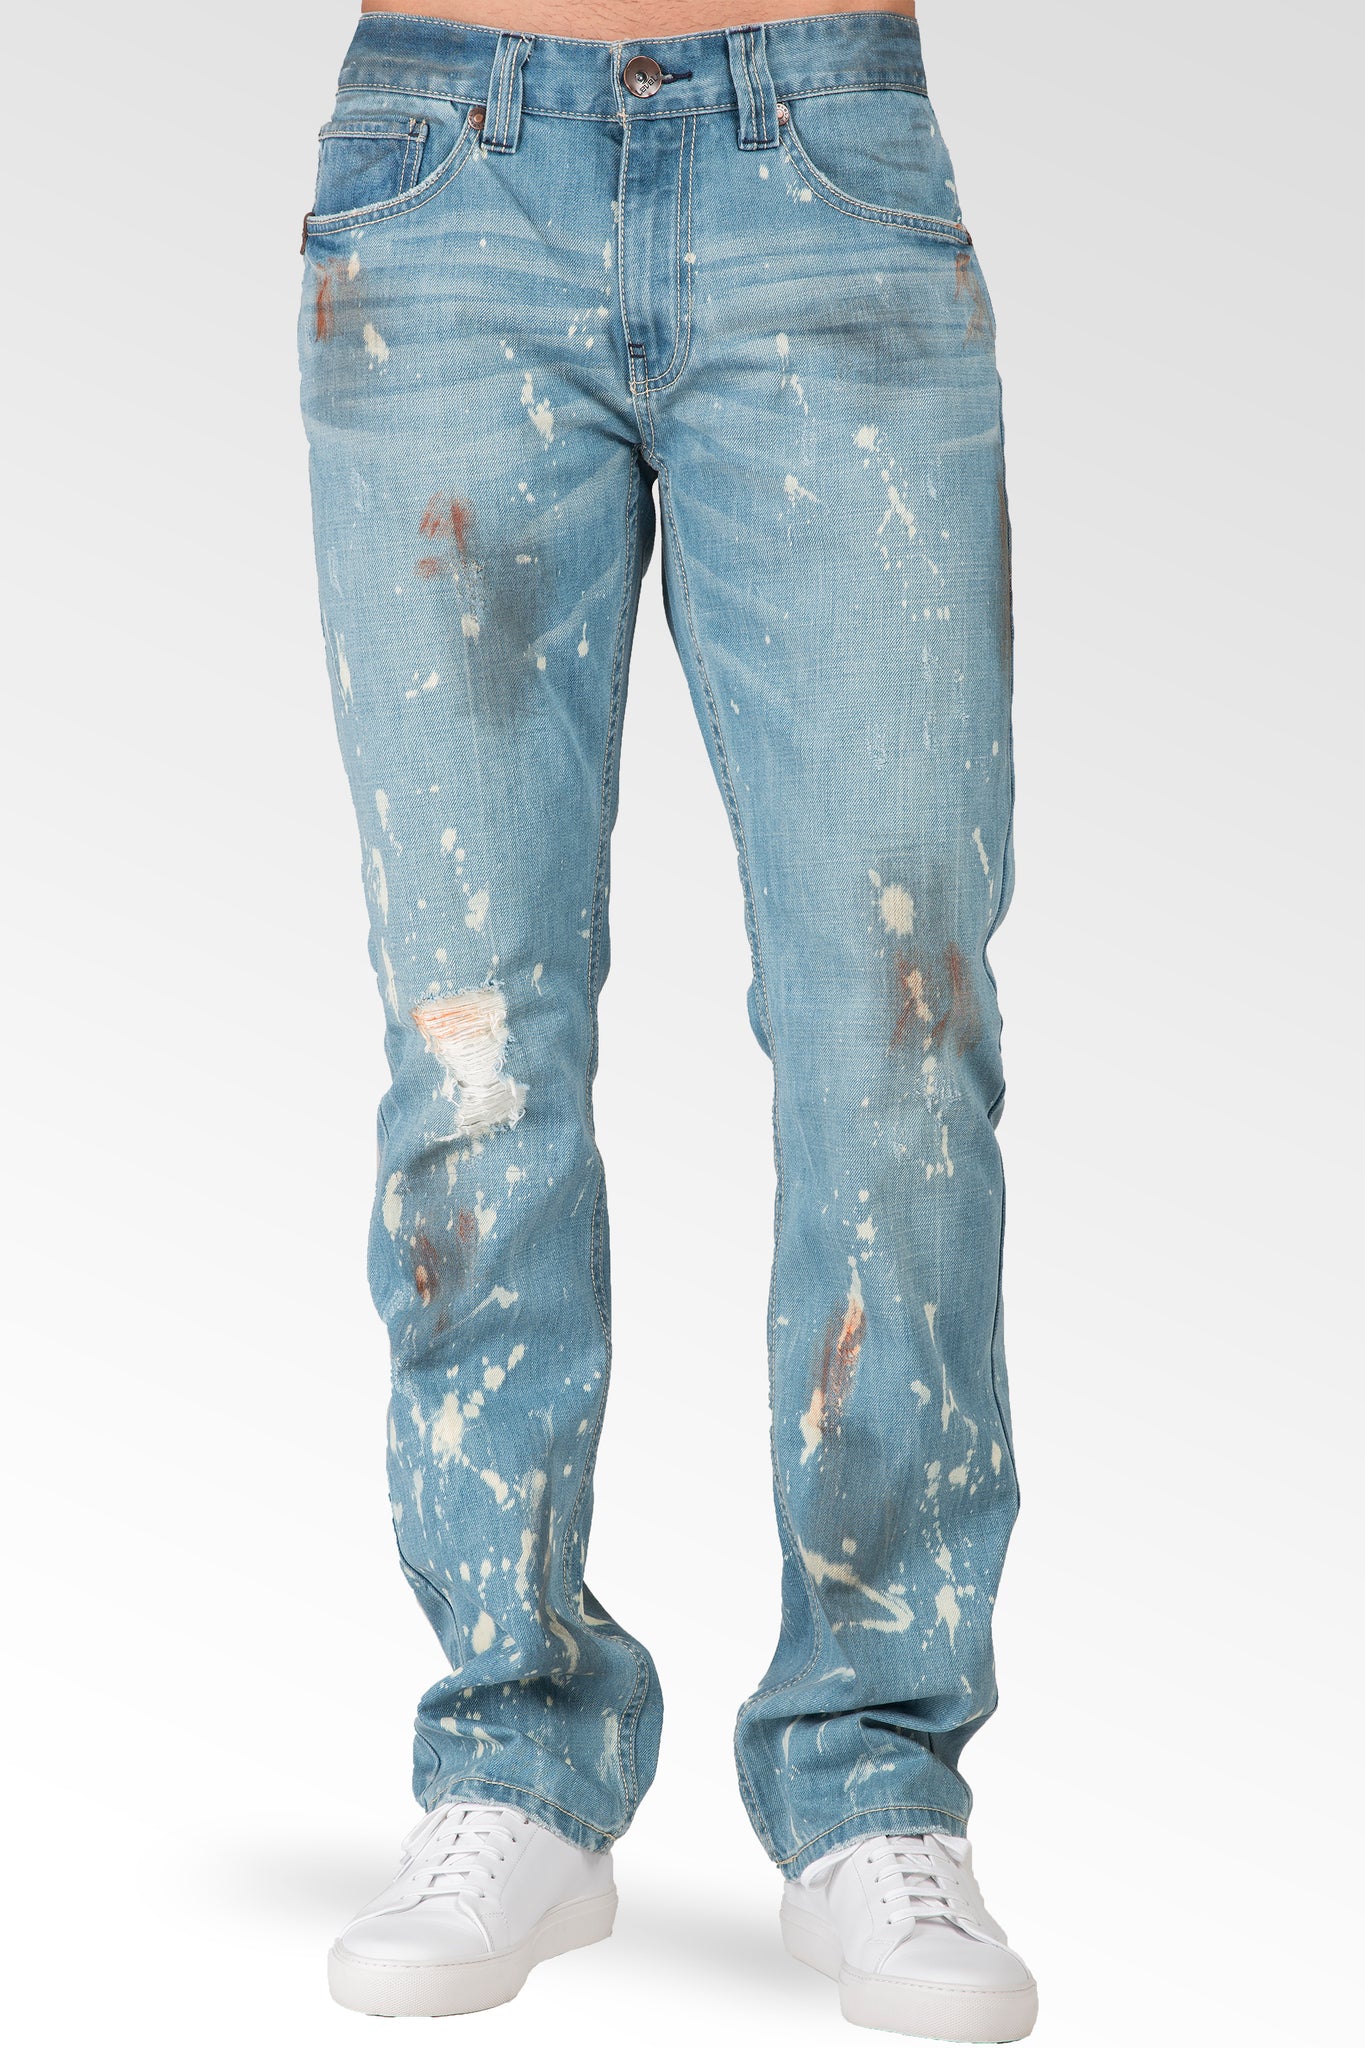 Misterio montaje Parásito Level 7 Men's Slim Straight Light Paint Splatter Wash 5 Pocket jeans Premium  Denim – Level 7 Jeans